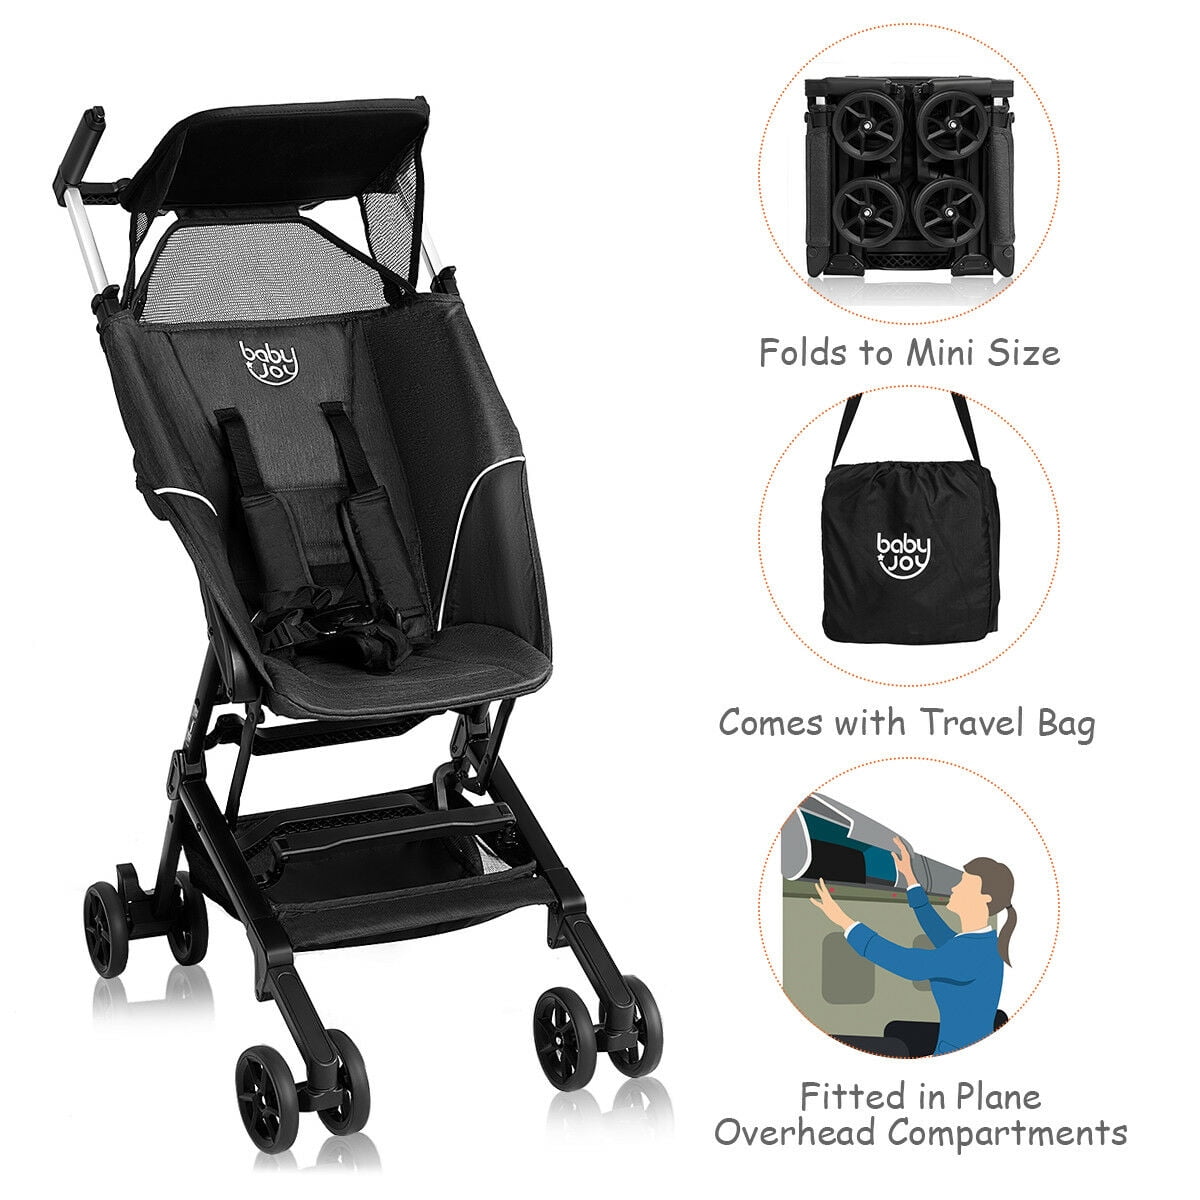 smallest fold down stroller